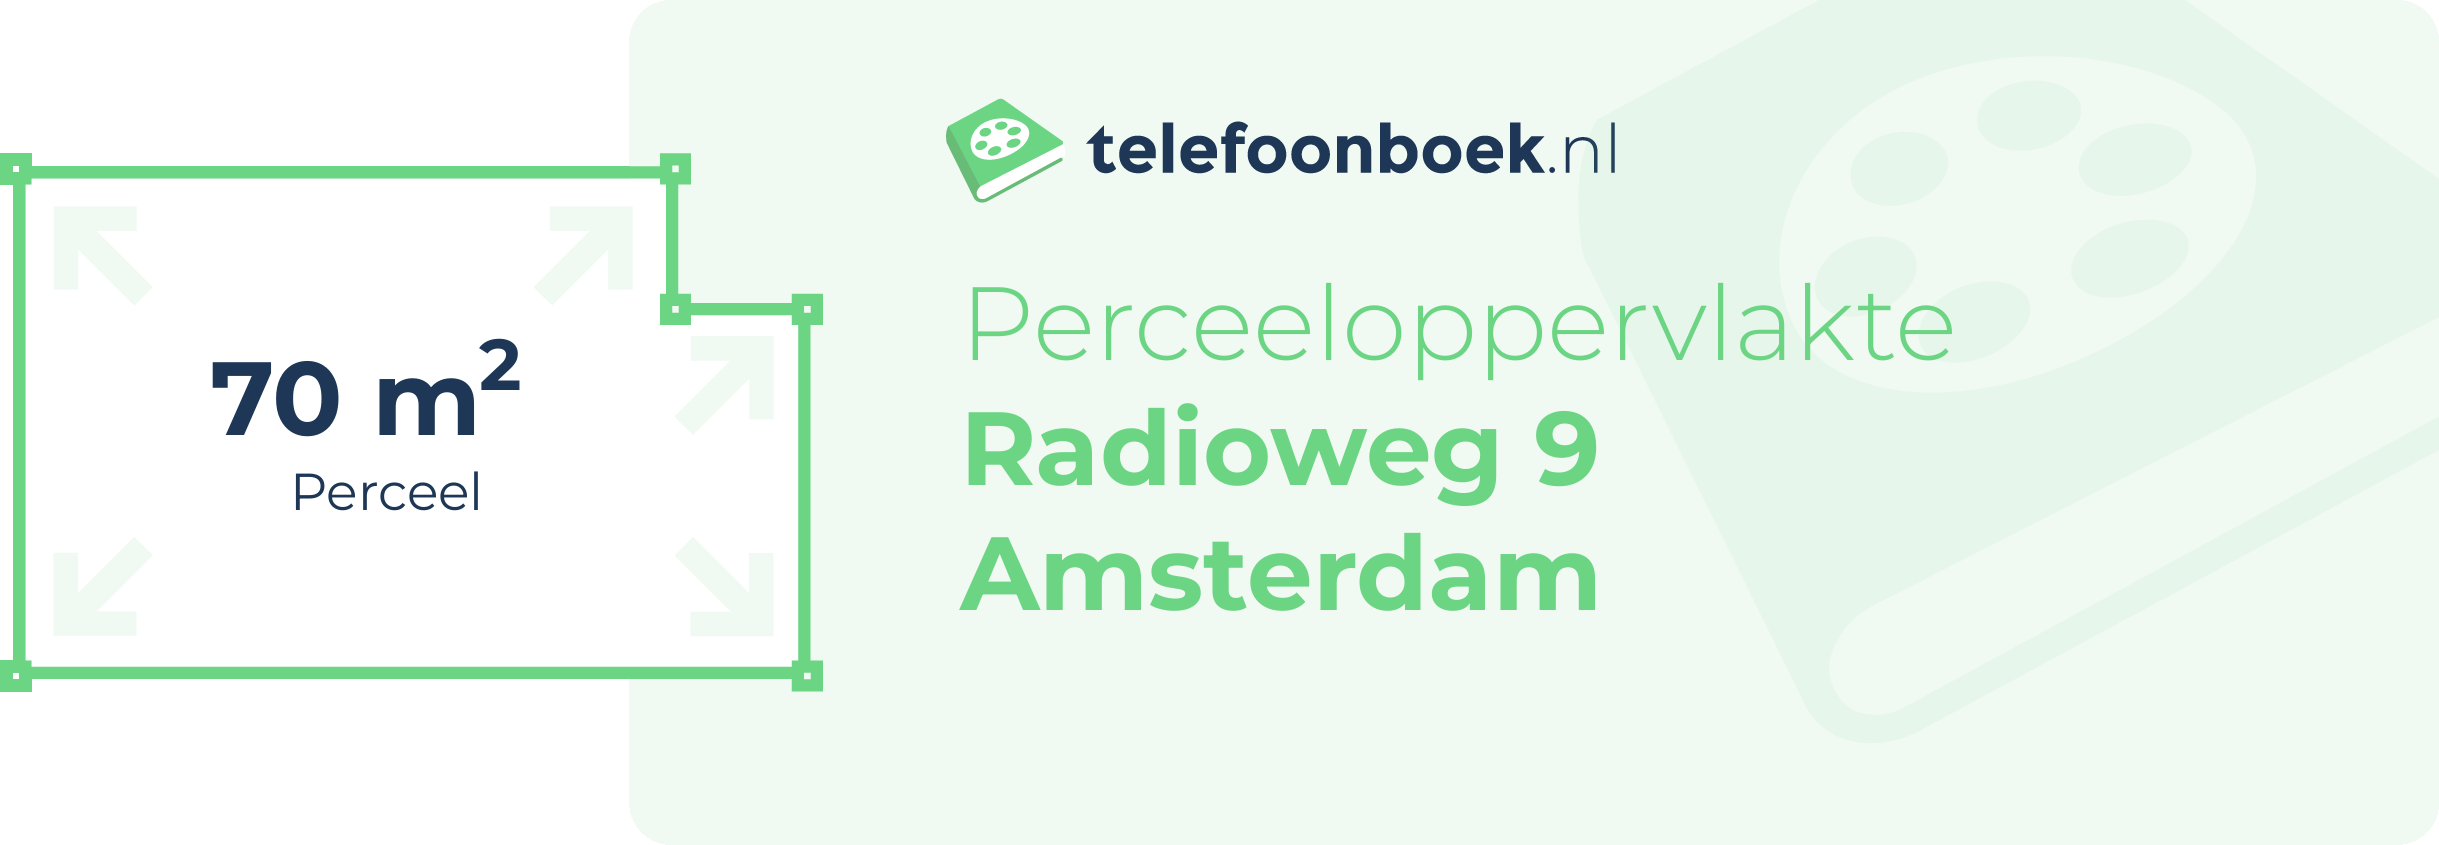 Perceeloppervlakte Radioweg 9 Amsterdam